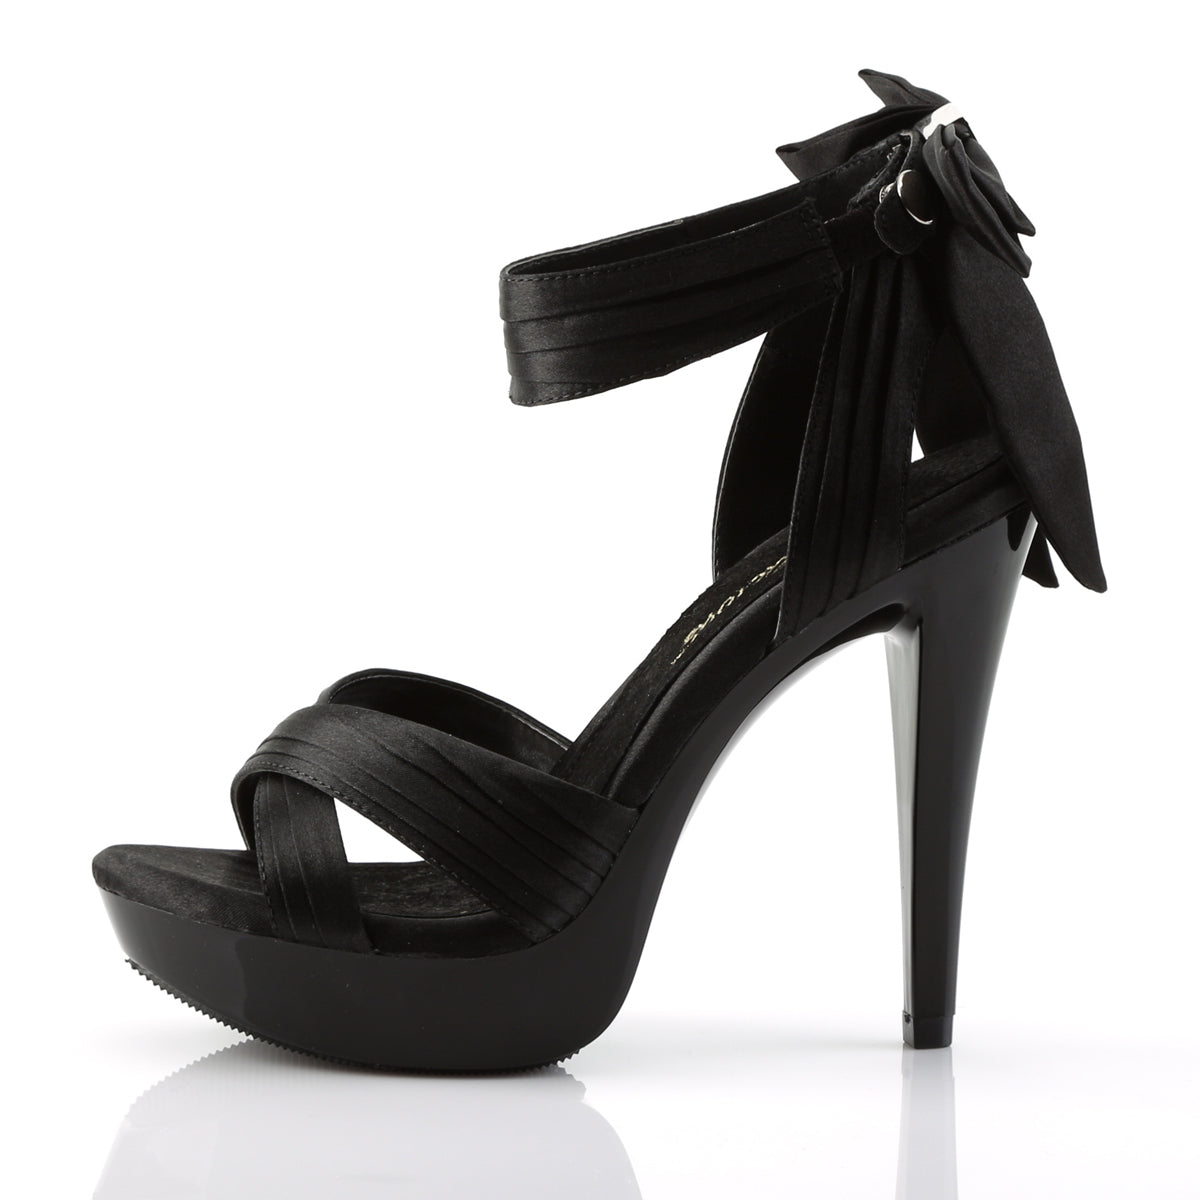 COCKTAIL-568 Fabulicious 5 Inch Heel Black Satin Sexy Shoes-Fabulicious- Sexy Shoes Pole Dance Heels